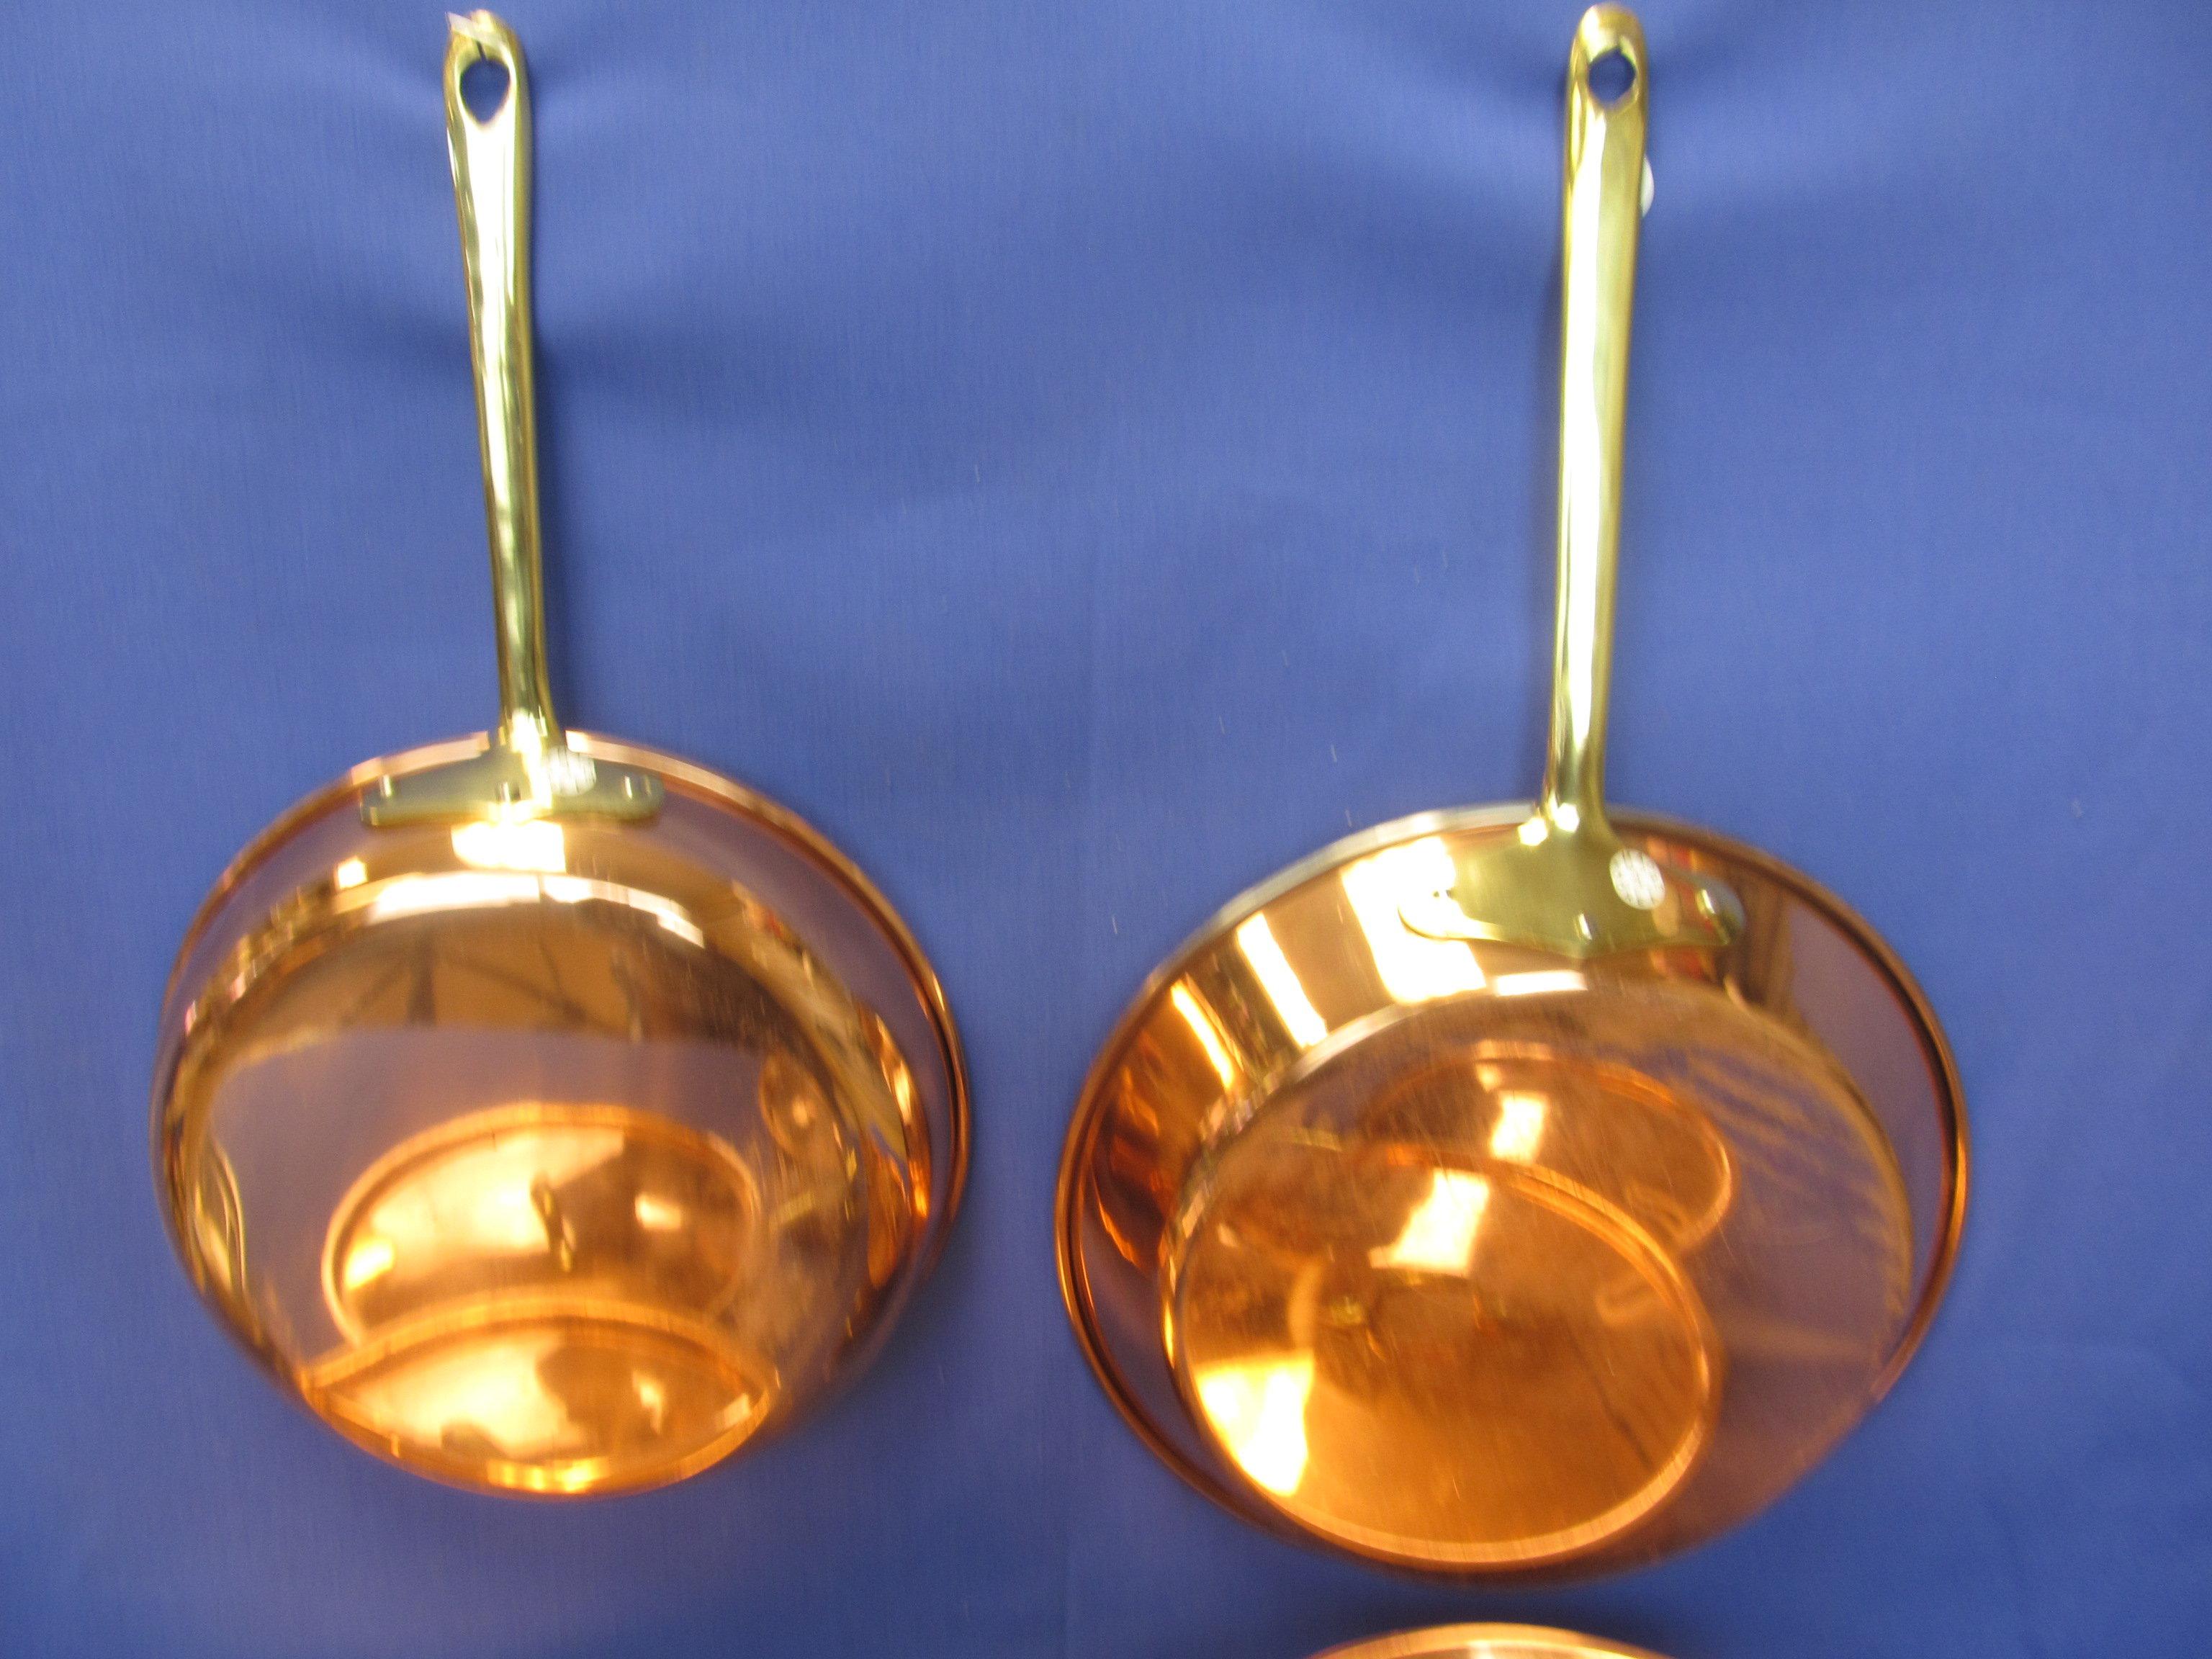 10 Piece Copper Cookware Set Brass Handles & Copper Clad Steel Pans